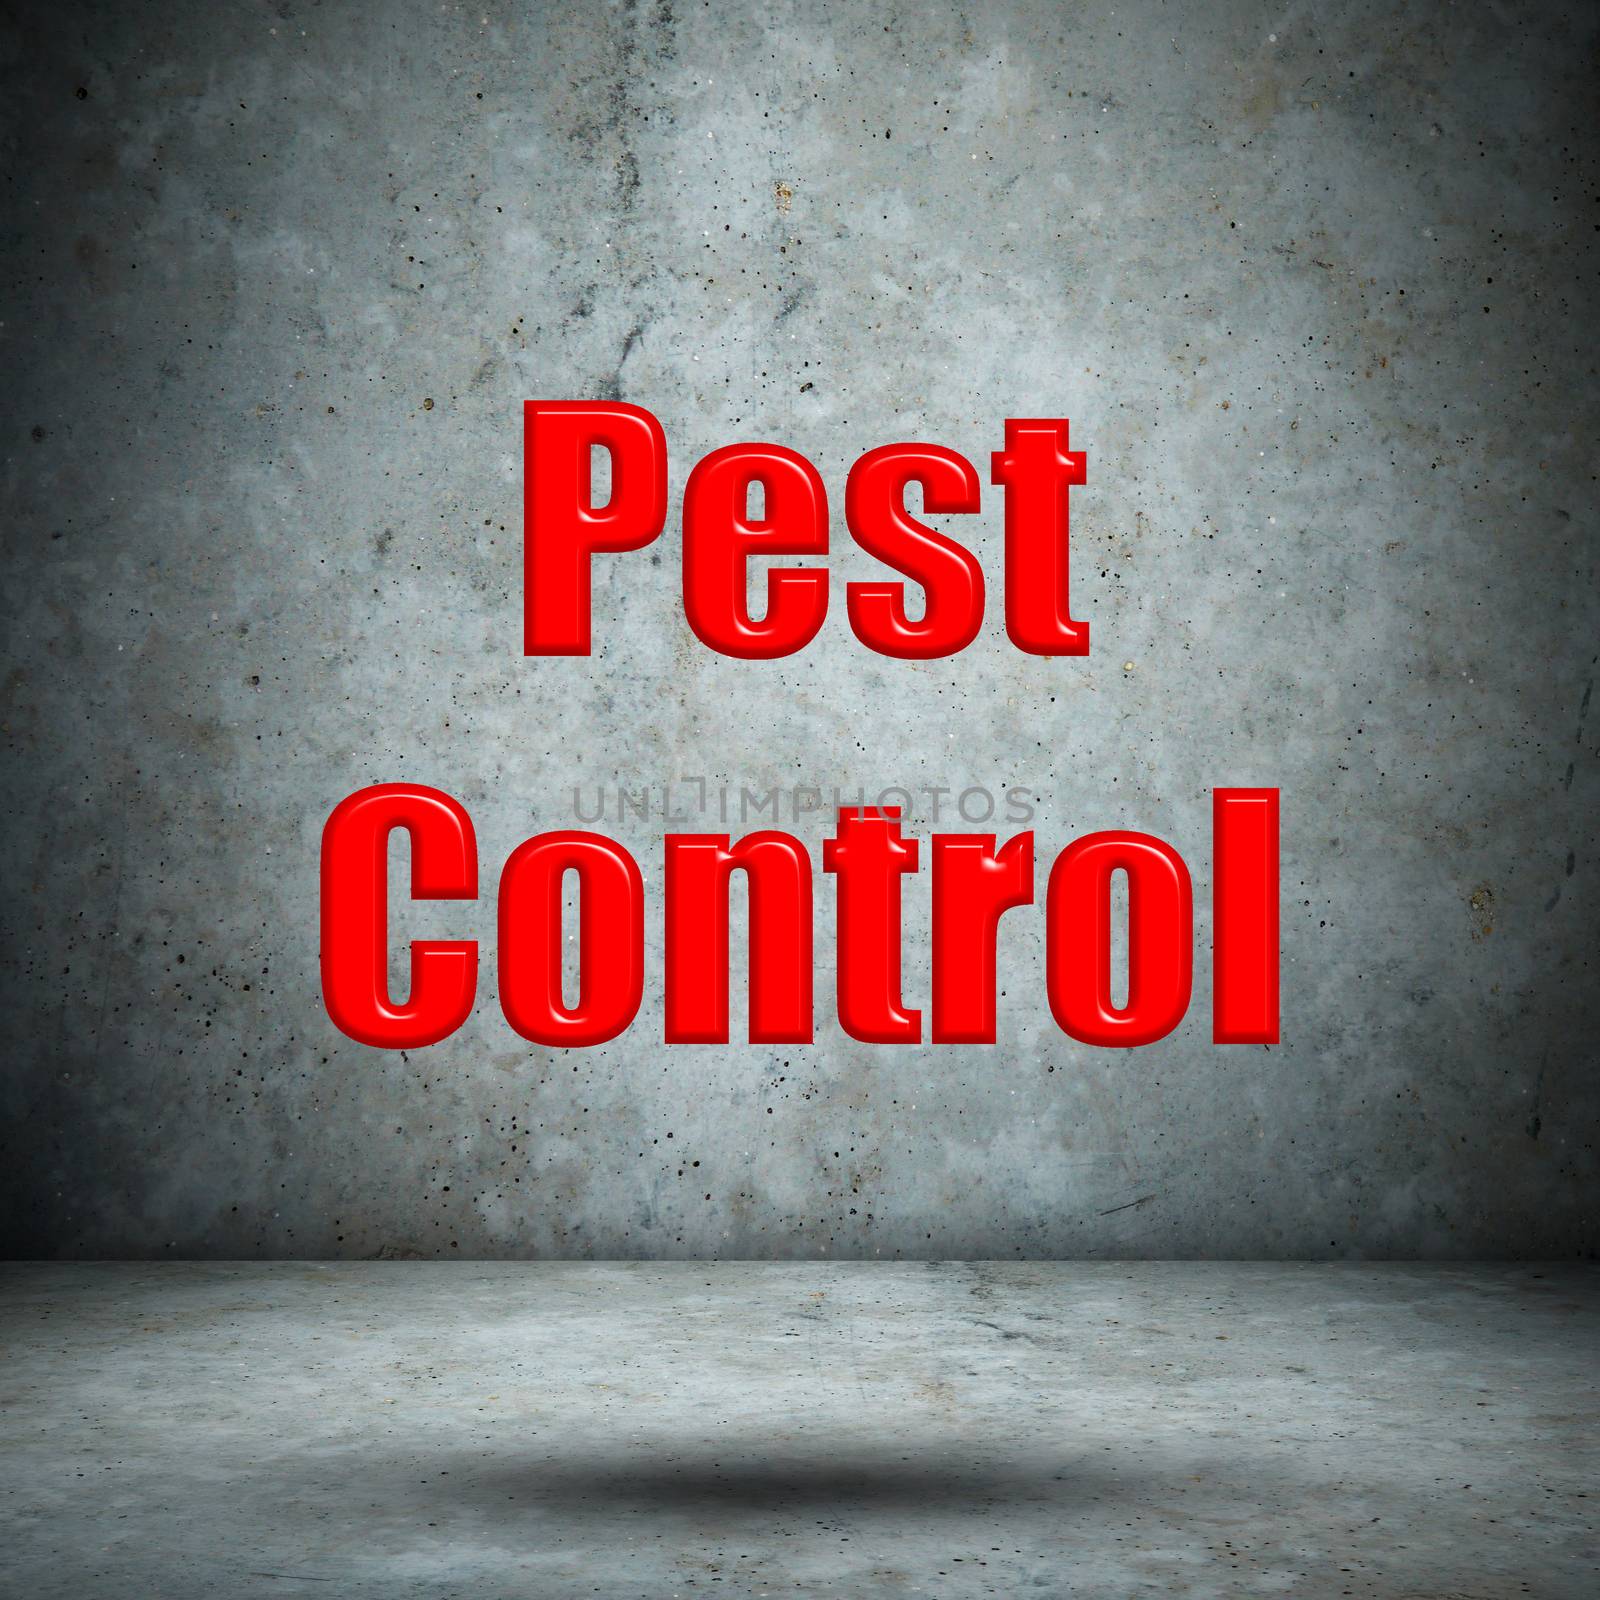 Pest Control concrete wall